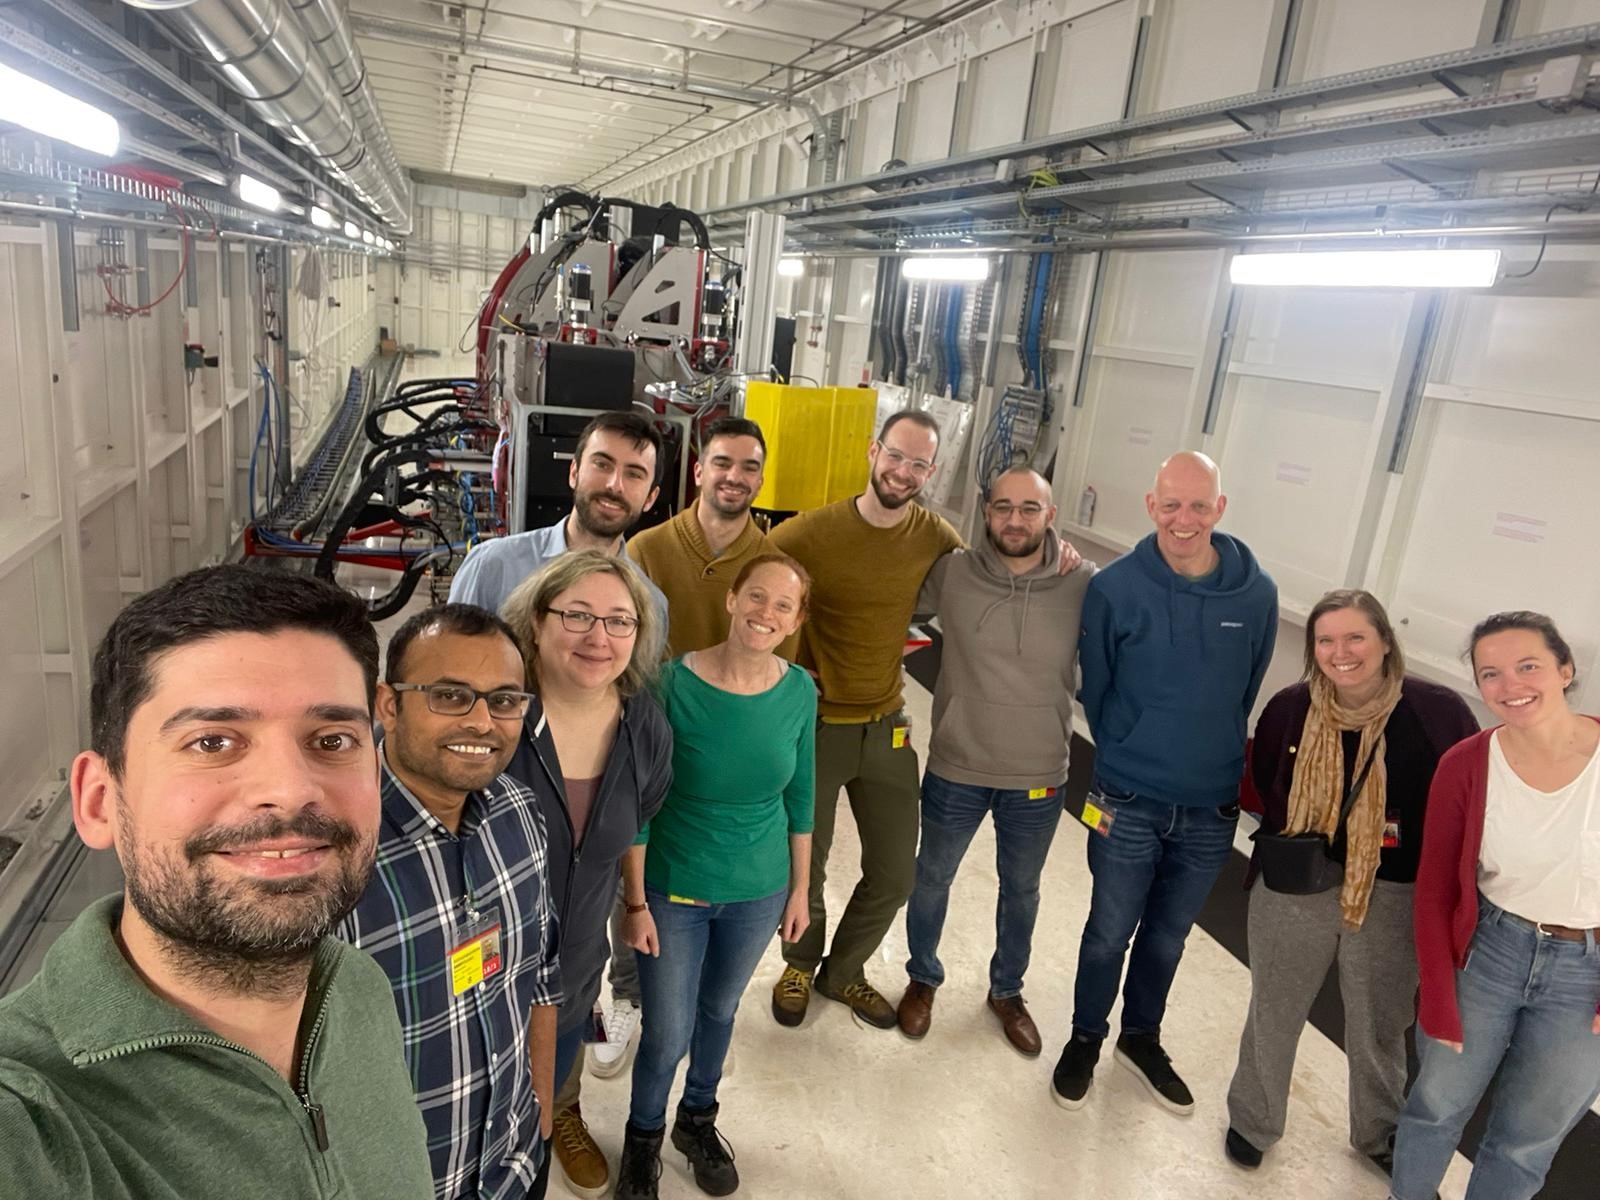 Last months visit to the European Synchrotron Radiation Facility